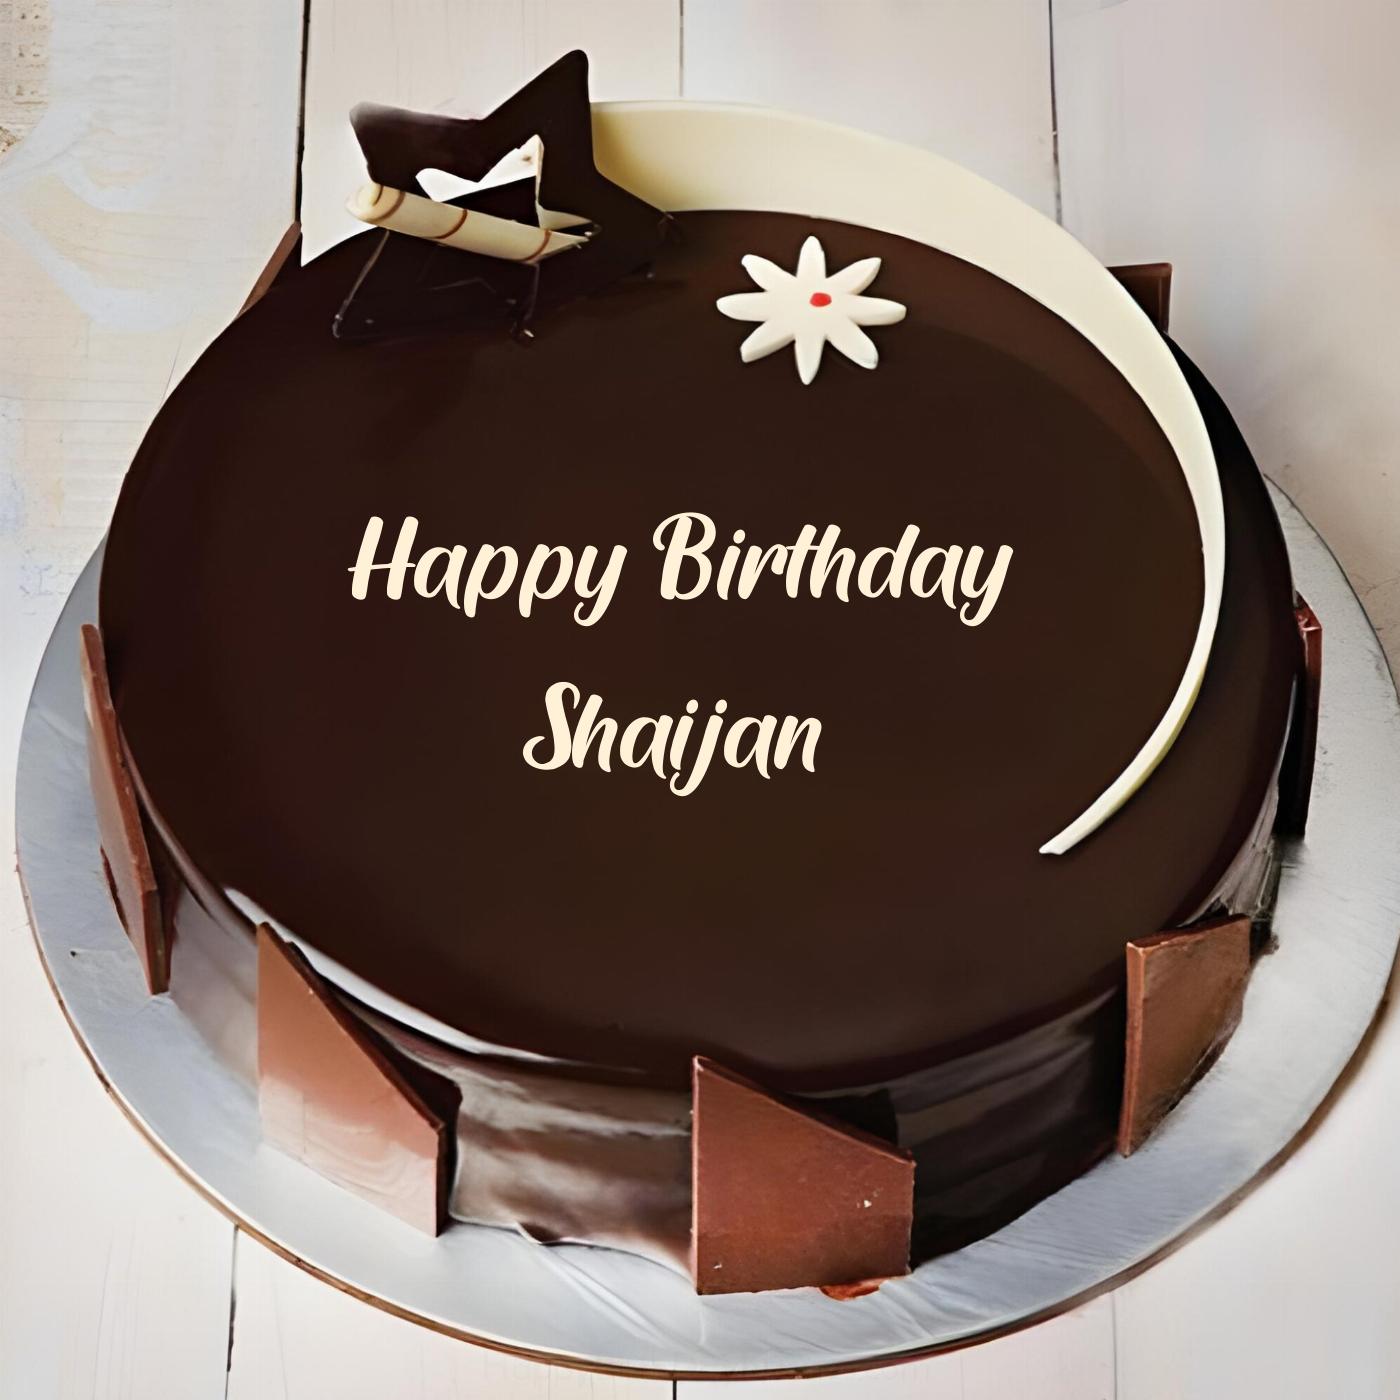 Happy Birthday Shaijan Chocolate Star Cake